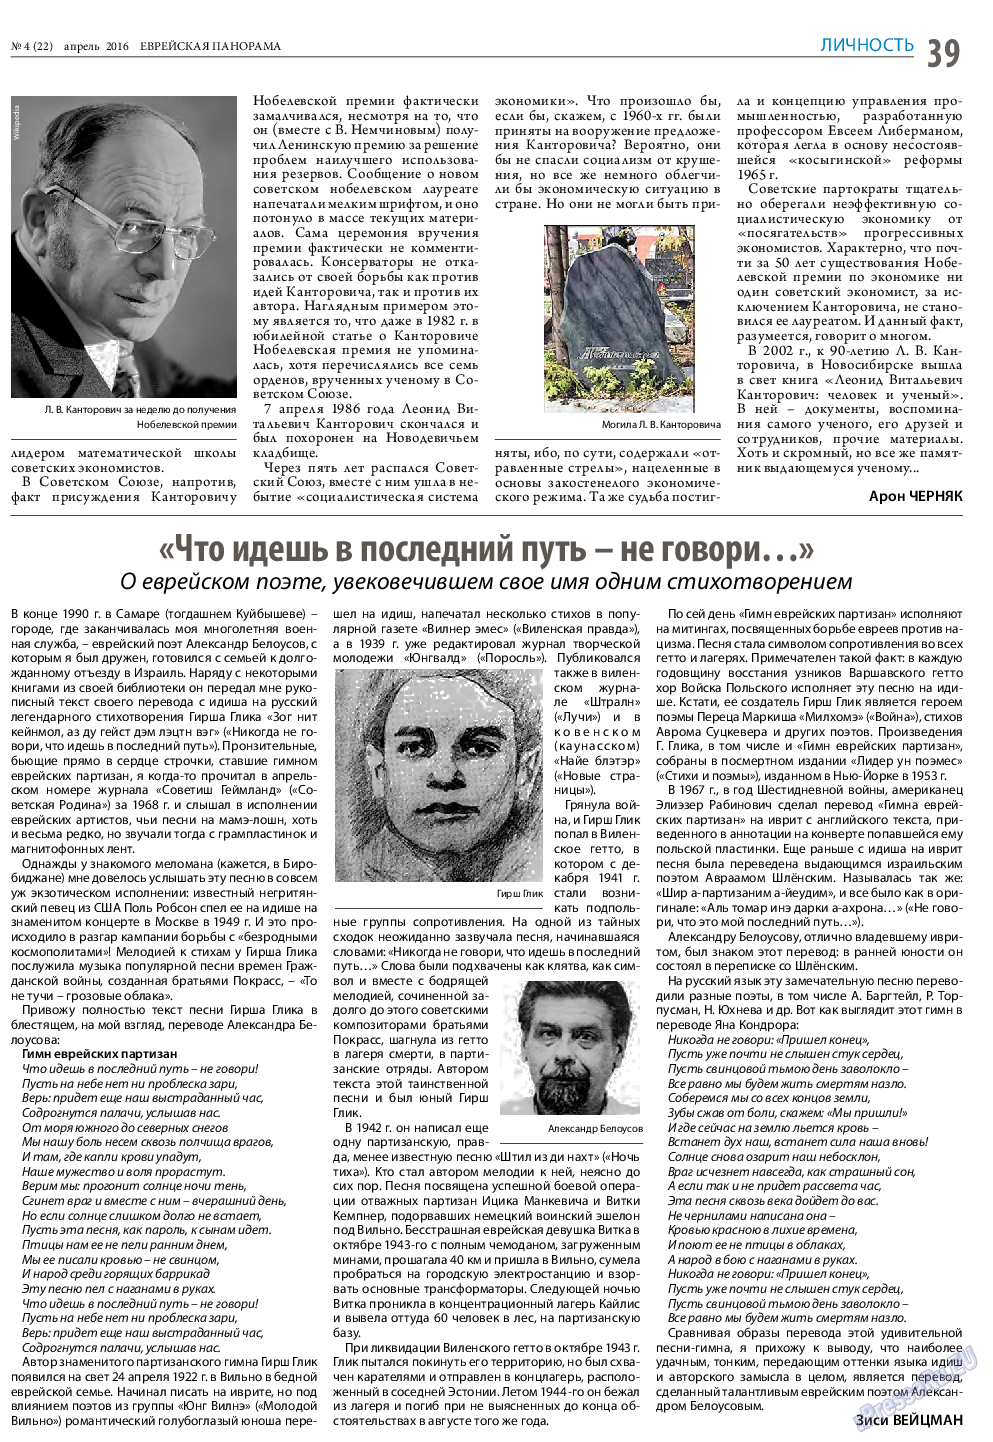 Еврейская панорама, газета. 2016 №4 стр.39